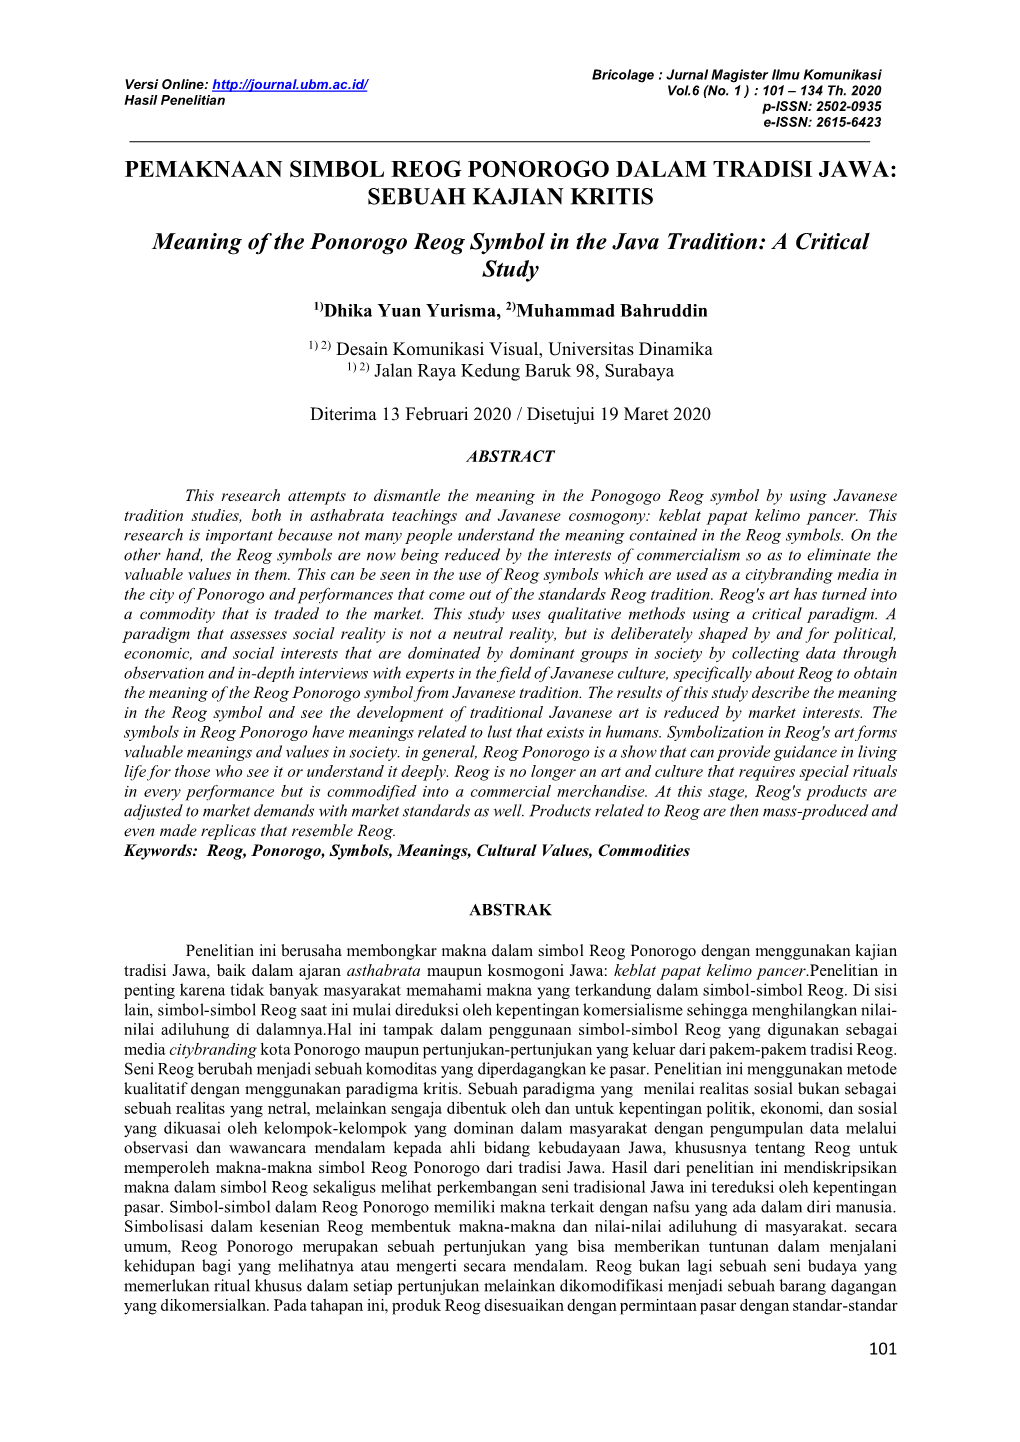 PEMAKNAAN SIMBOL REOG PONOROGO DALAM TRADISI JAWA: SEBUAH KAJIAN KRITIS Meaning of the Ponorogo Reog Symbol in the Java Tradition: a Critical Study